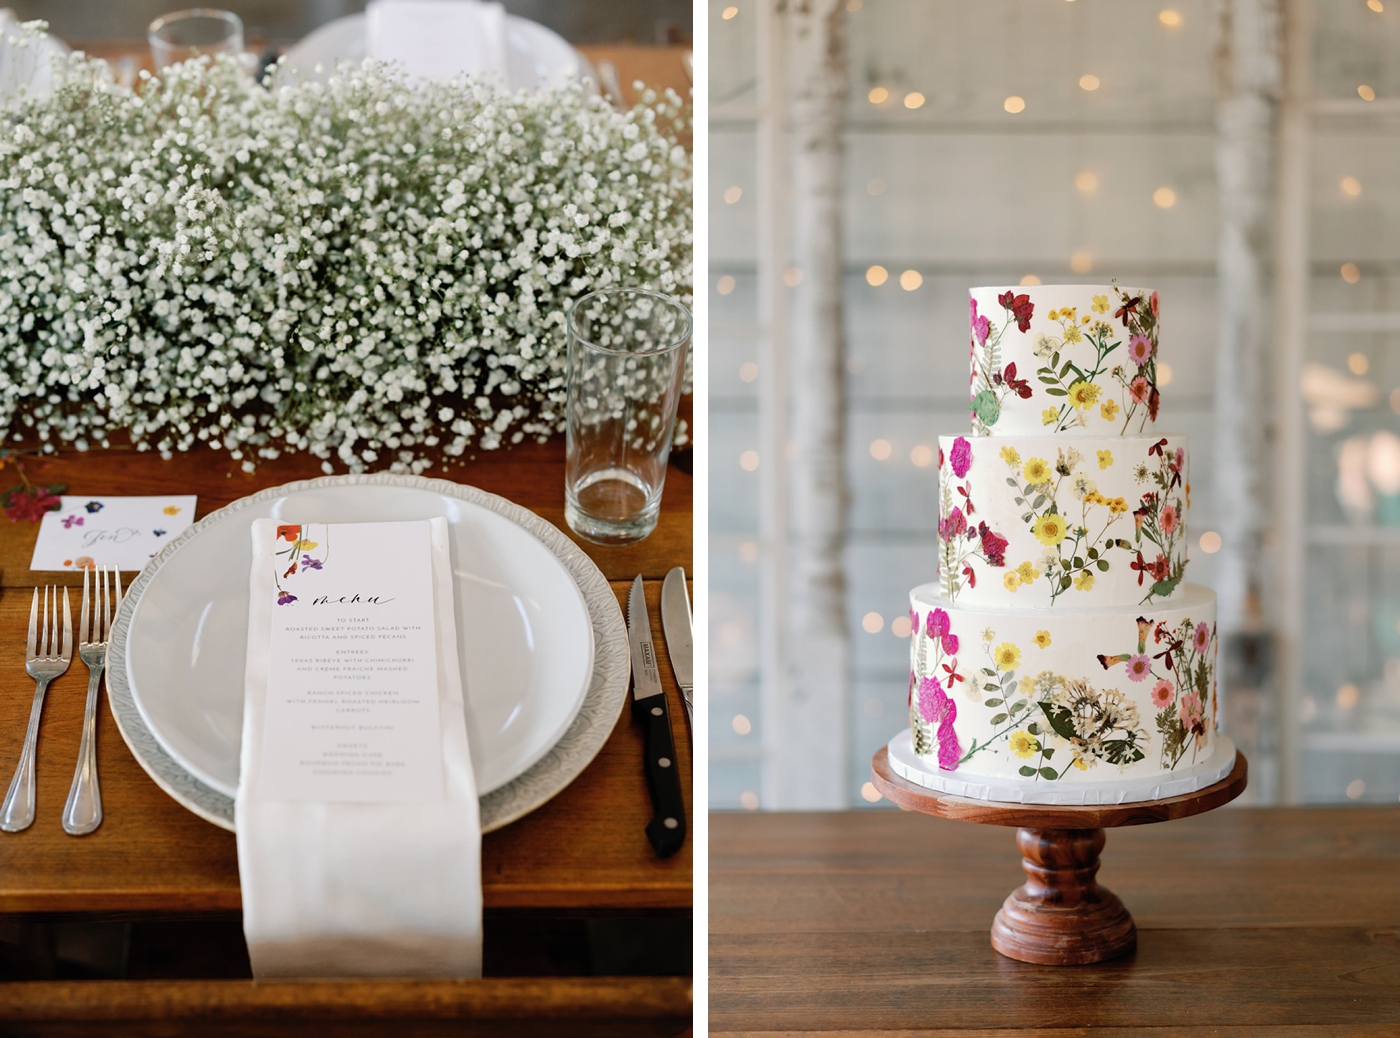 Three tier wedding cake with dried flowers